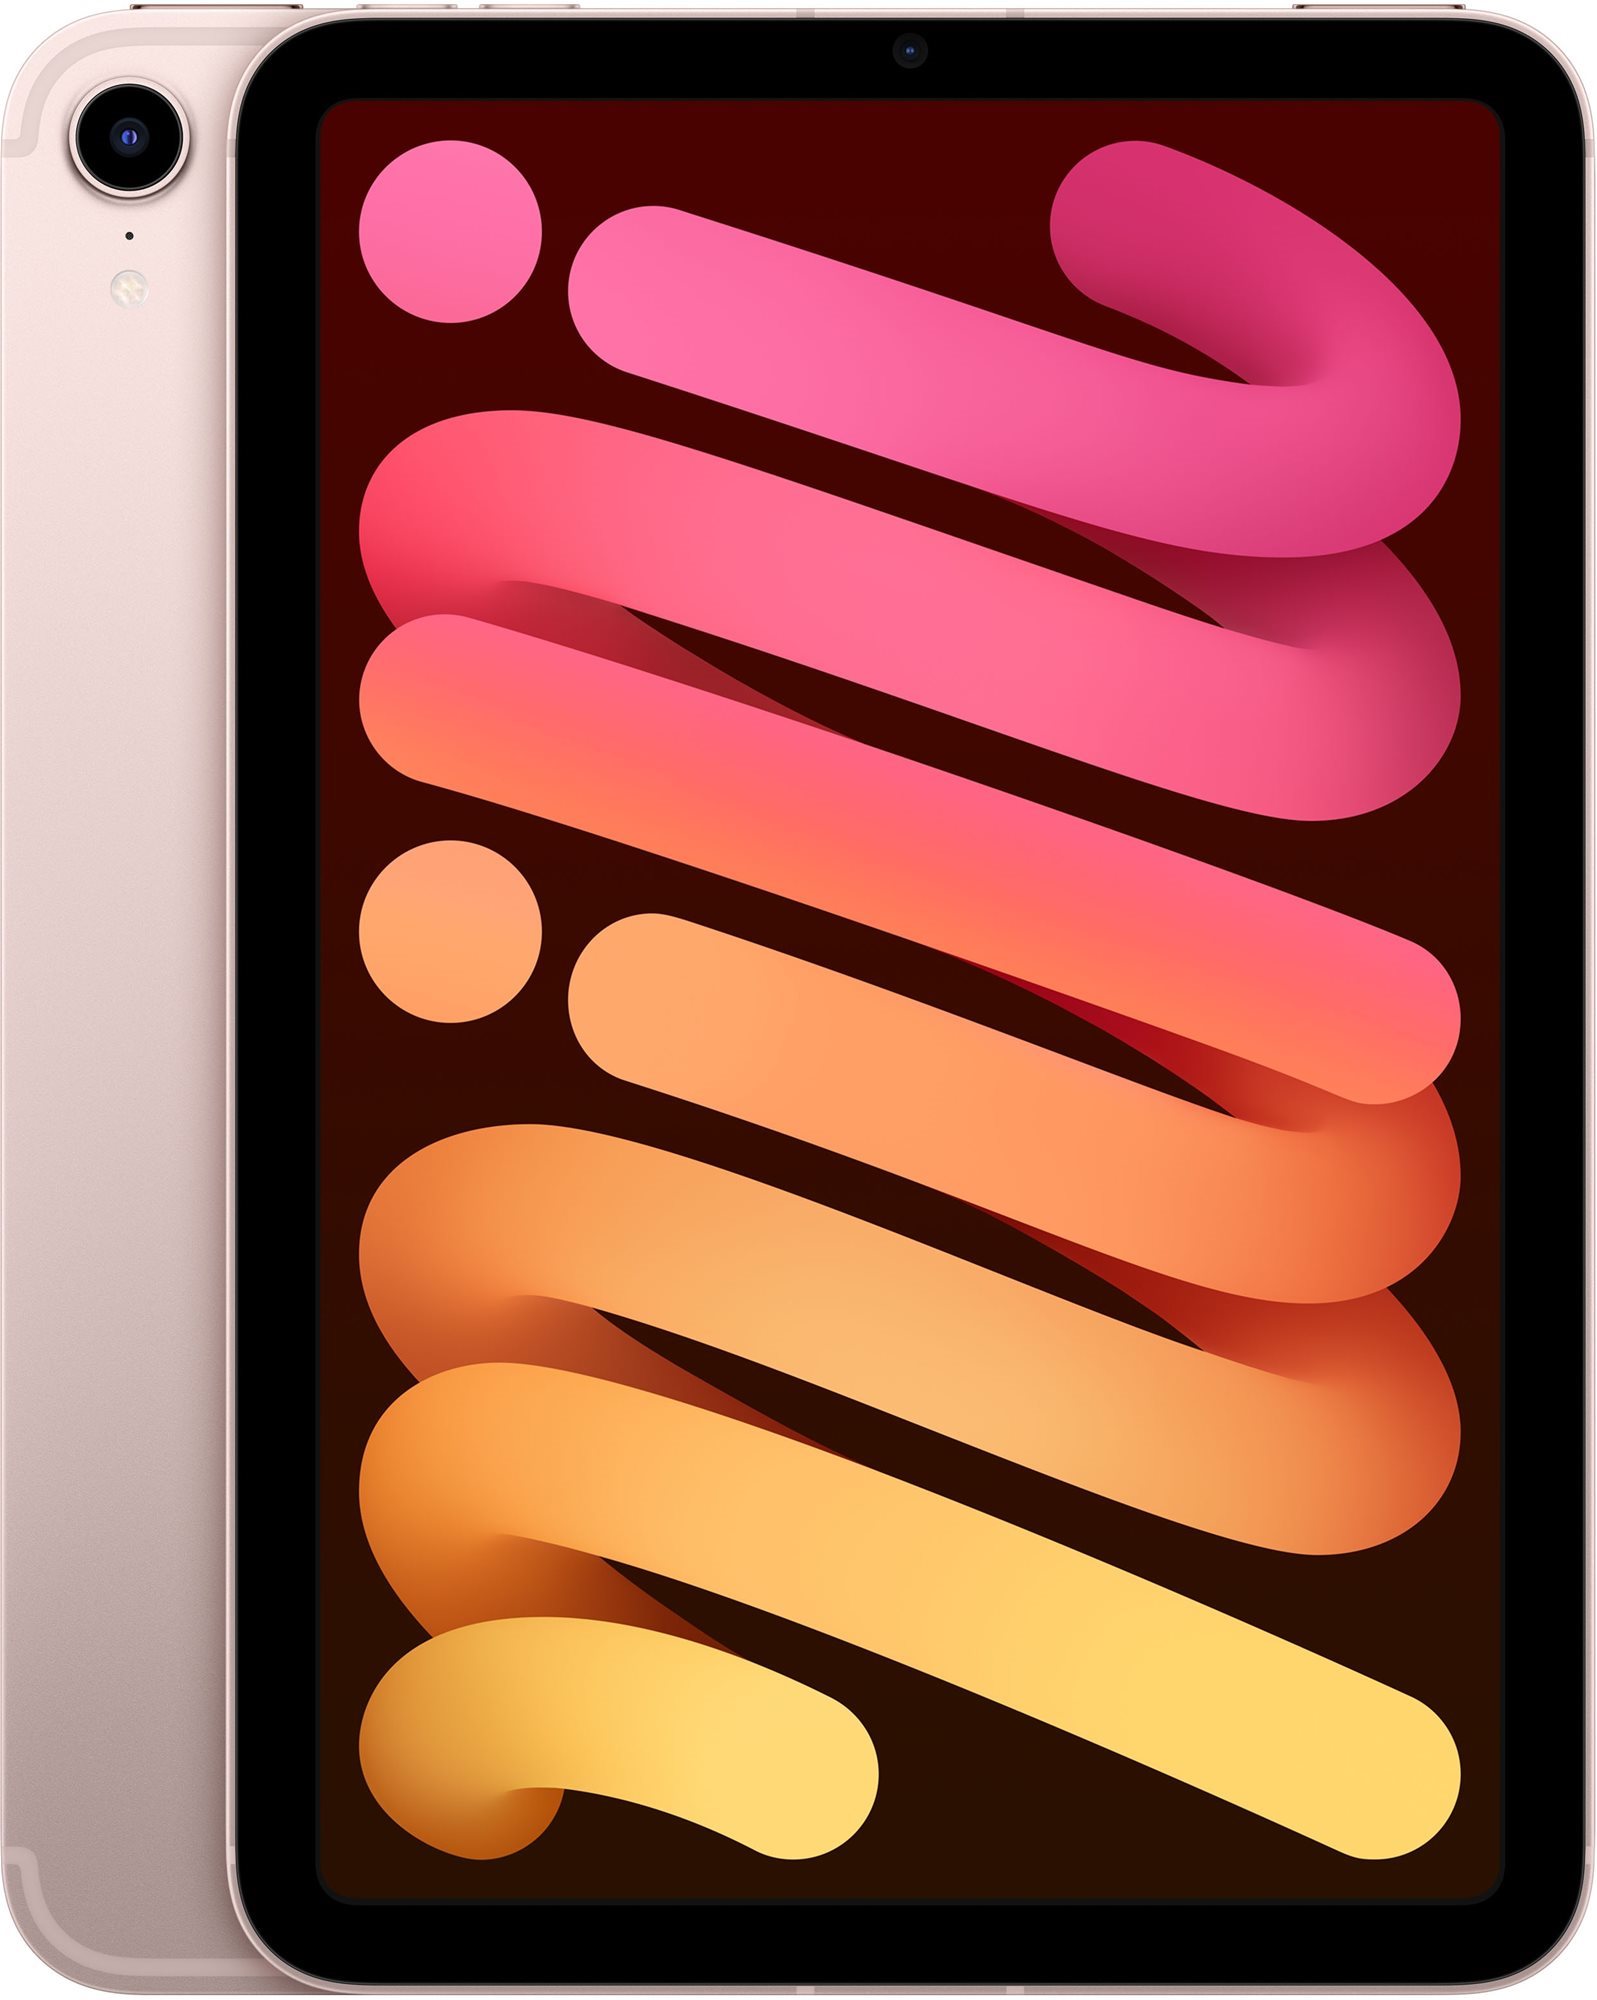 Apple ipad mini 2021 64gb cellular - rózsaszín